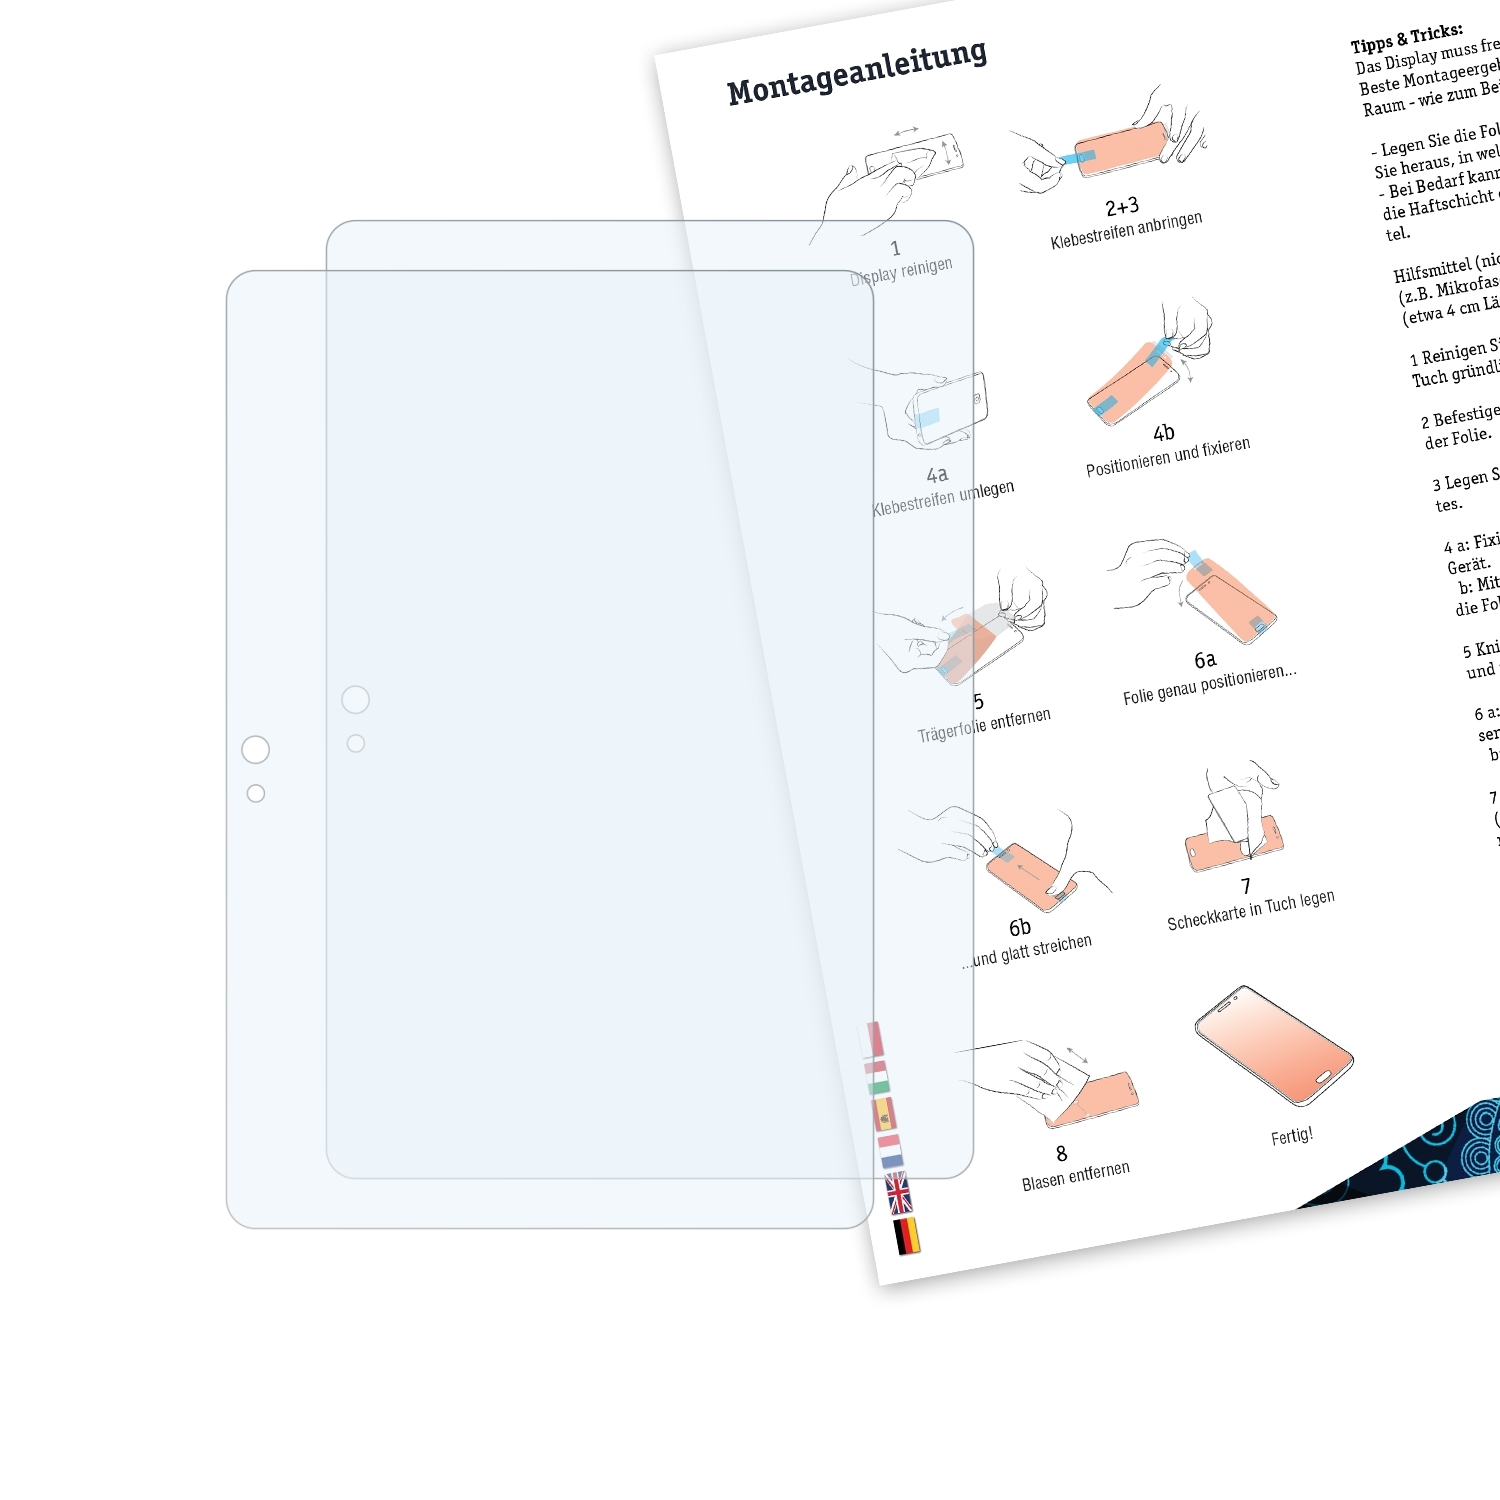 Fire Kindle HDX Amazon Basics-Clear (Model BRUNI 2x 2013)) Schutzfolie(für 7